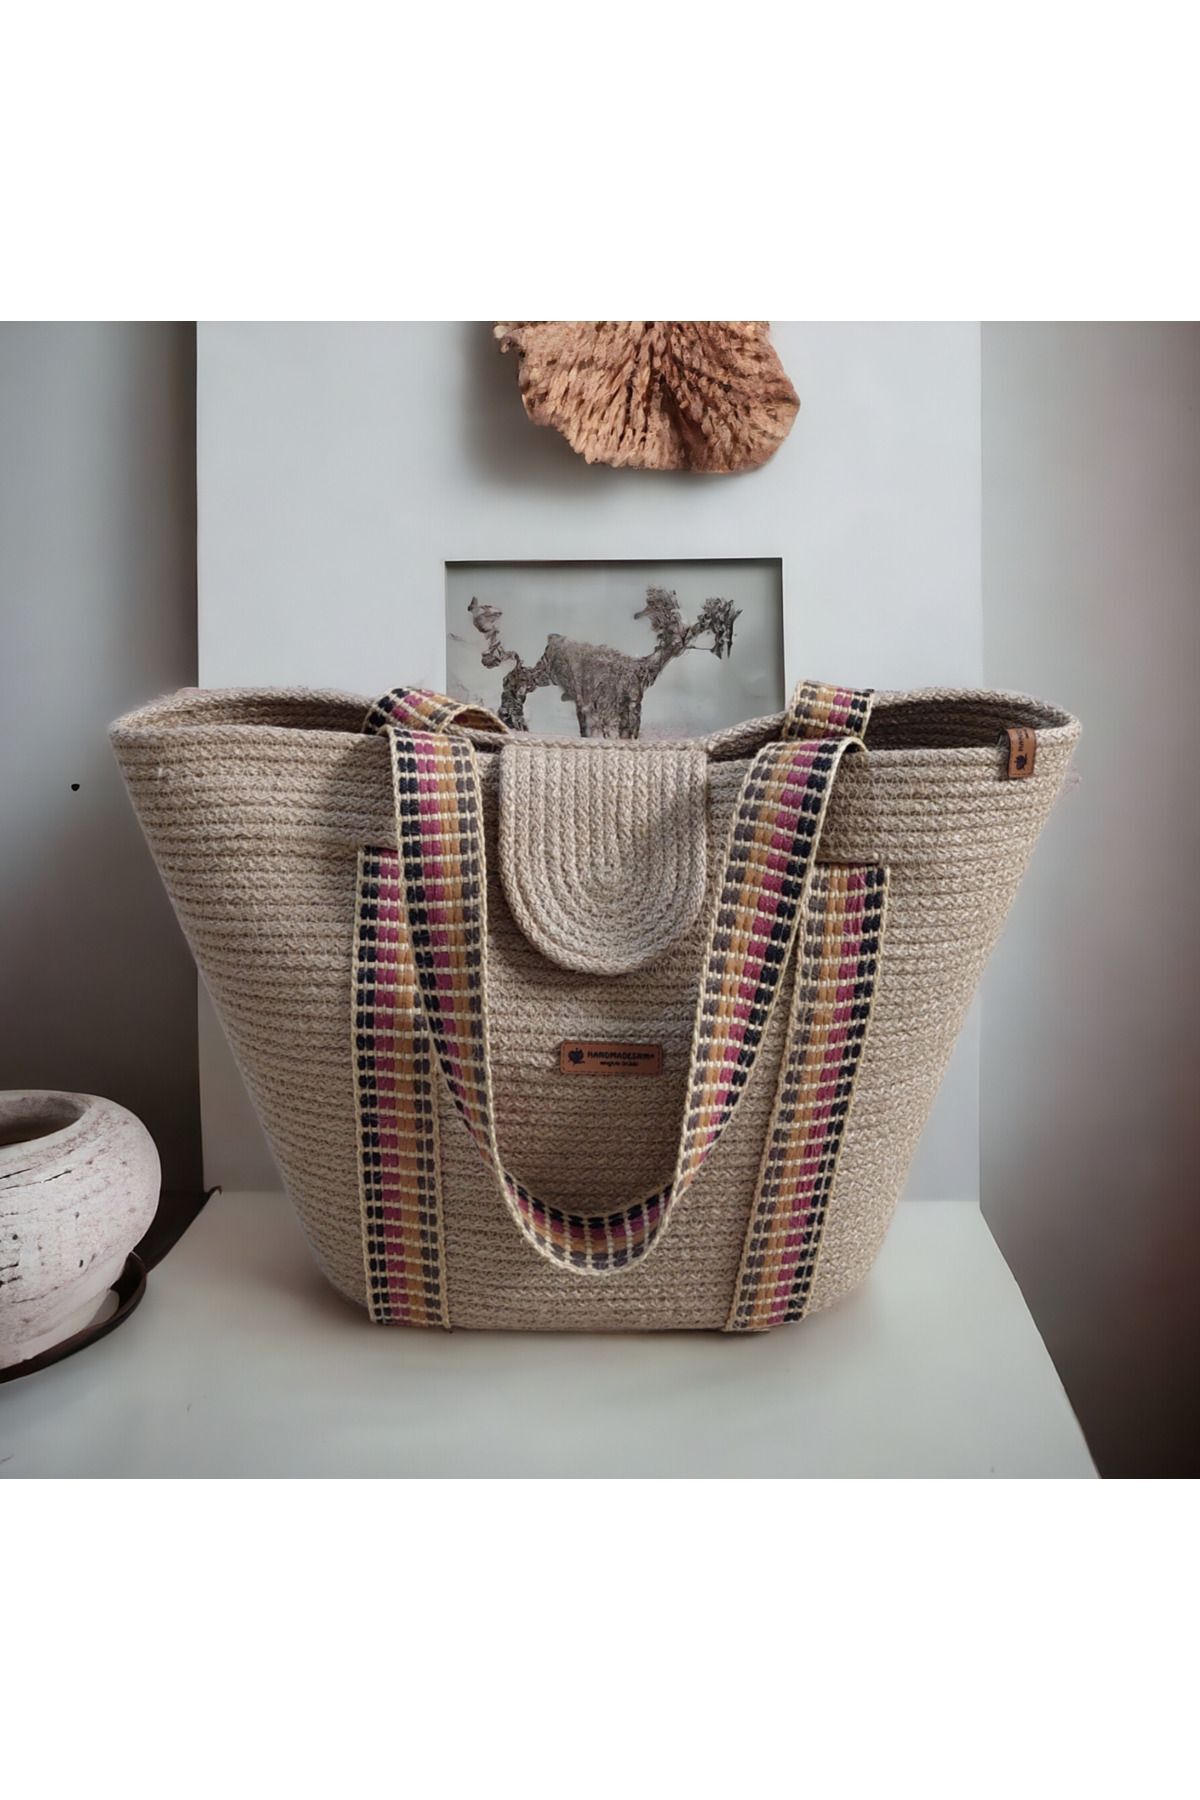 HandmadeSNM Plaj çantası, tasarim çanta,El yapımı,Bohem